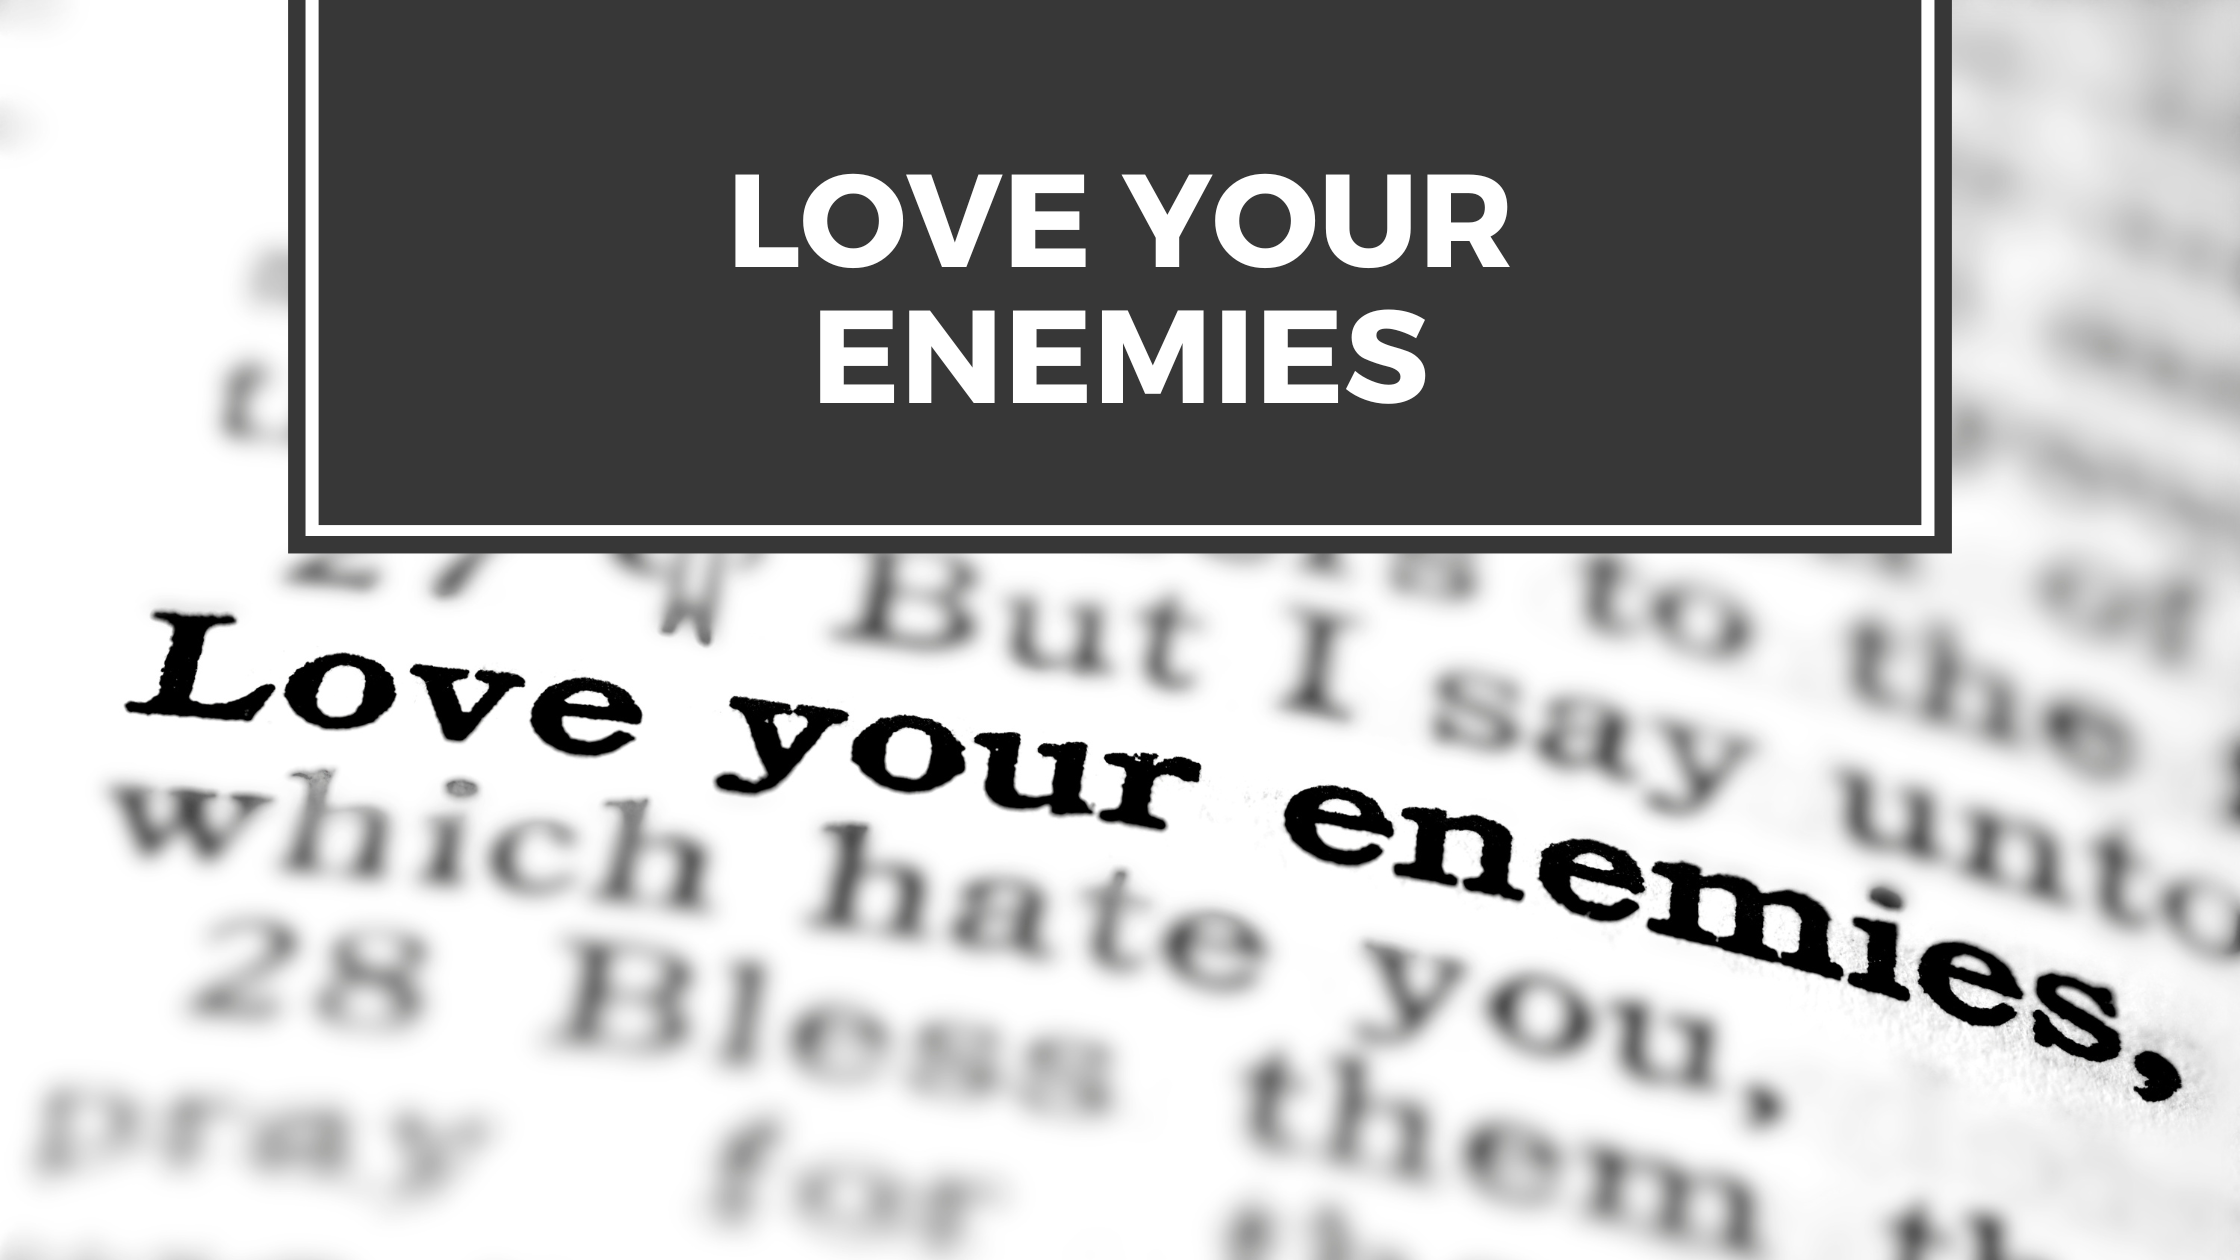 Love Your Enemies blog title